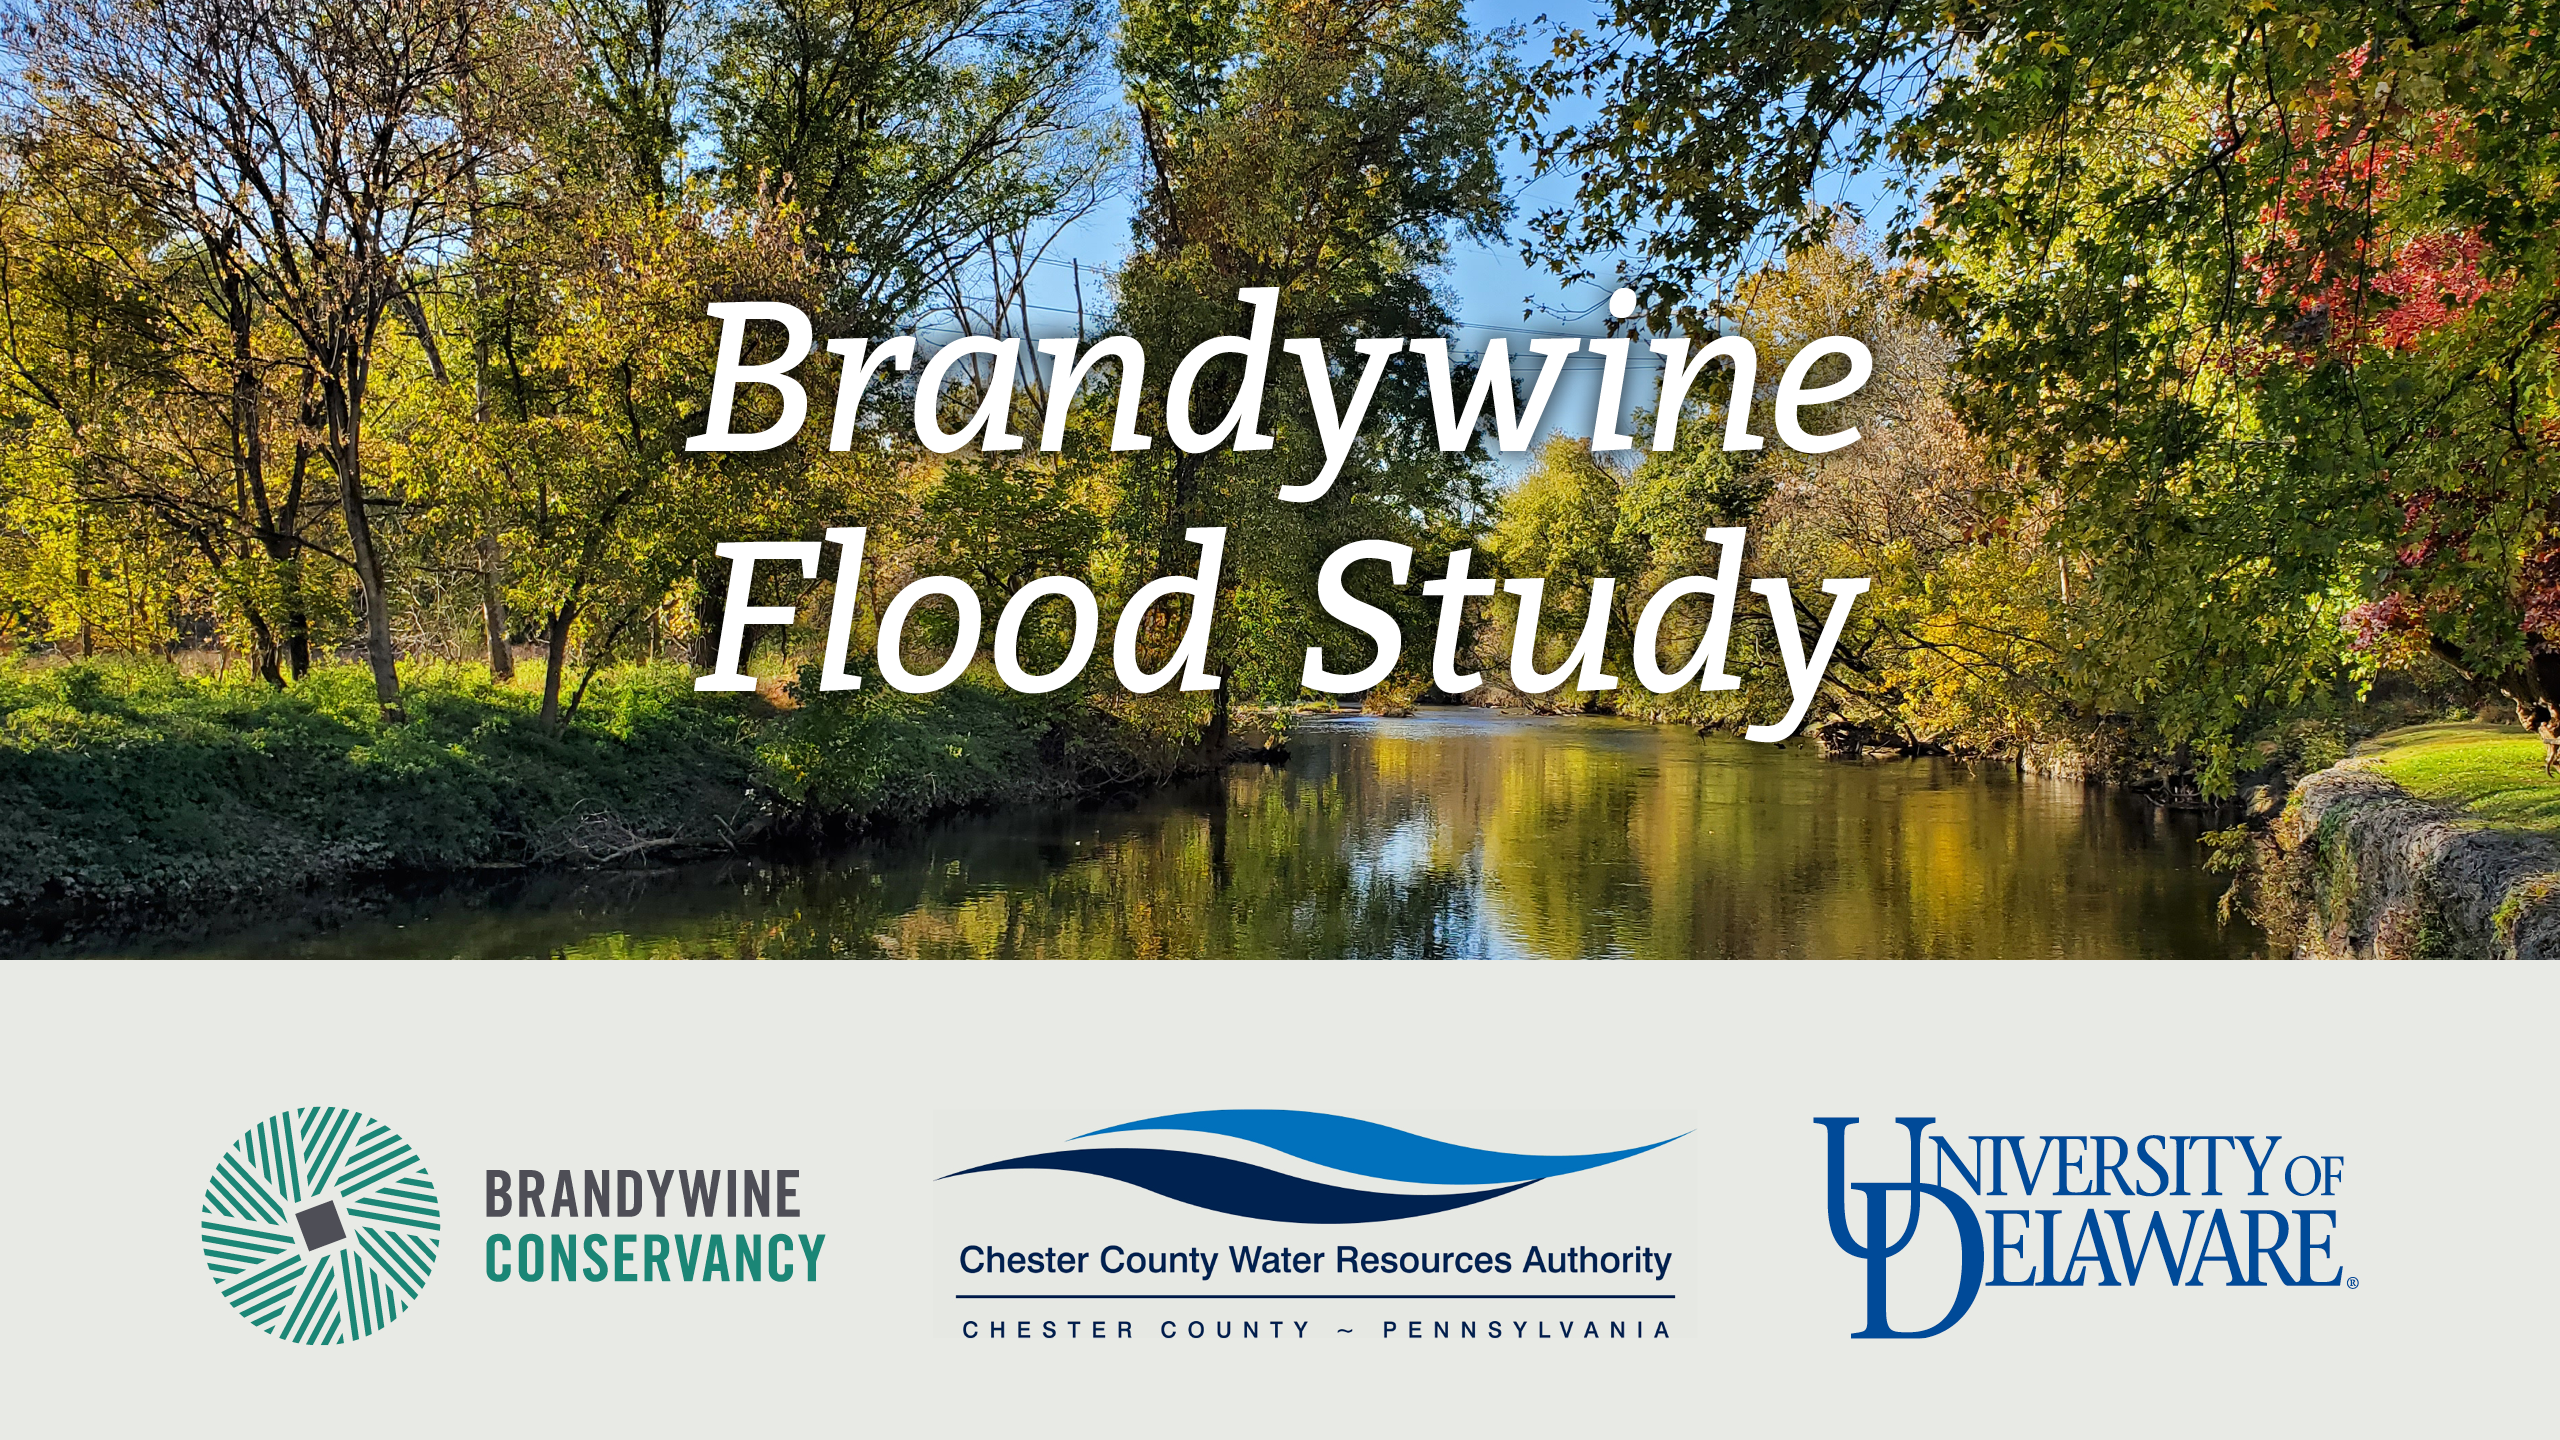 Brandywine Flood Study graphic with partner logos